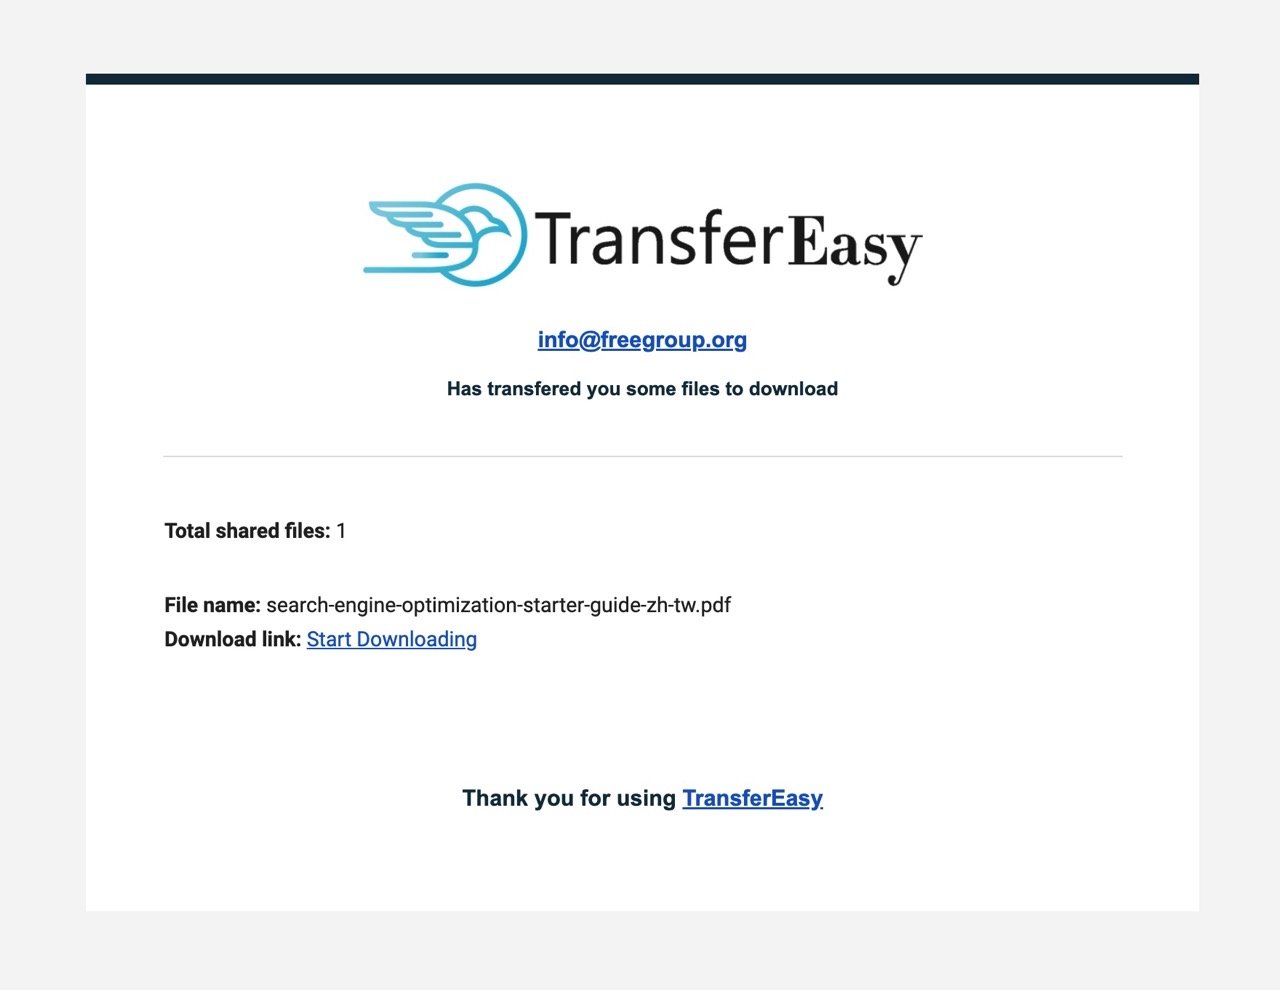 TransferEasy